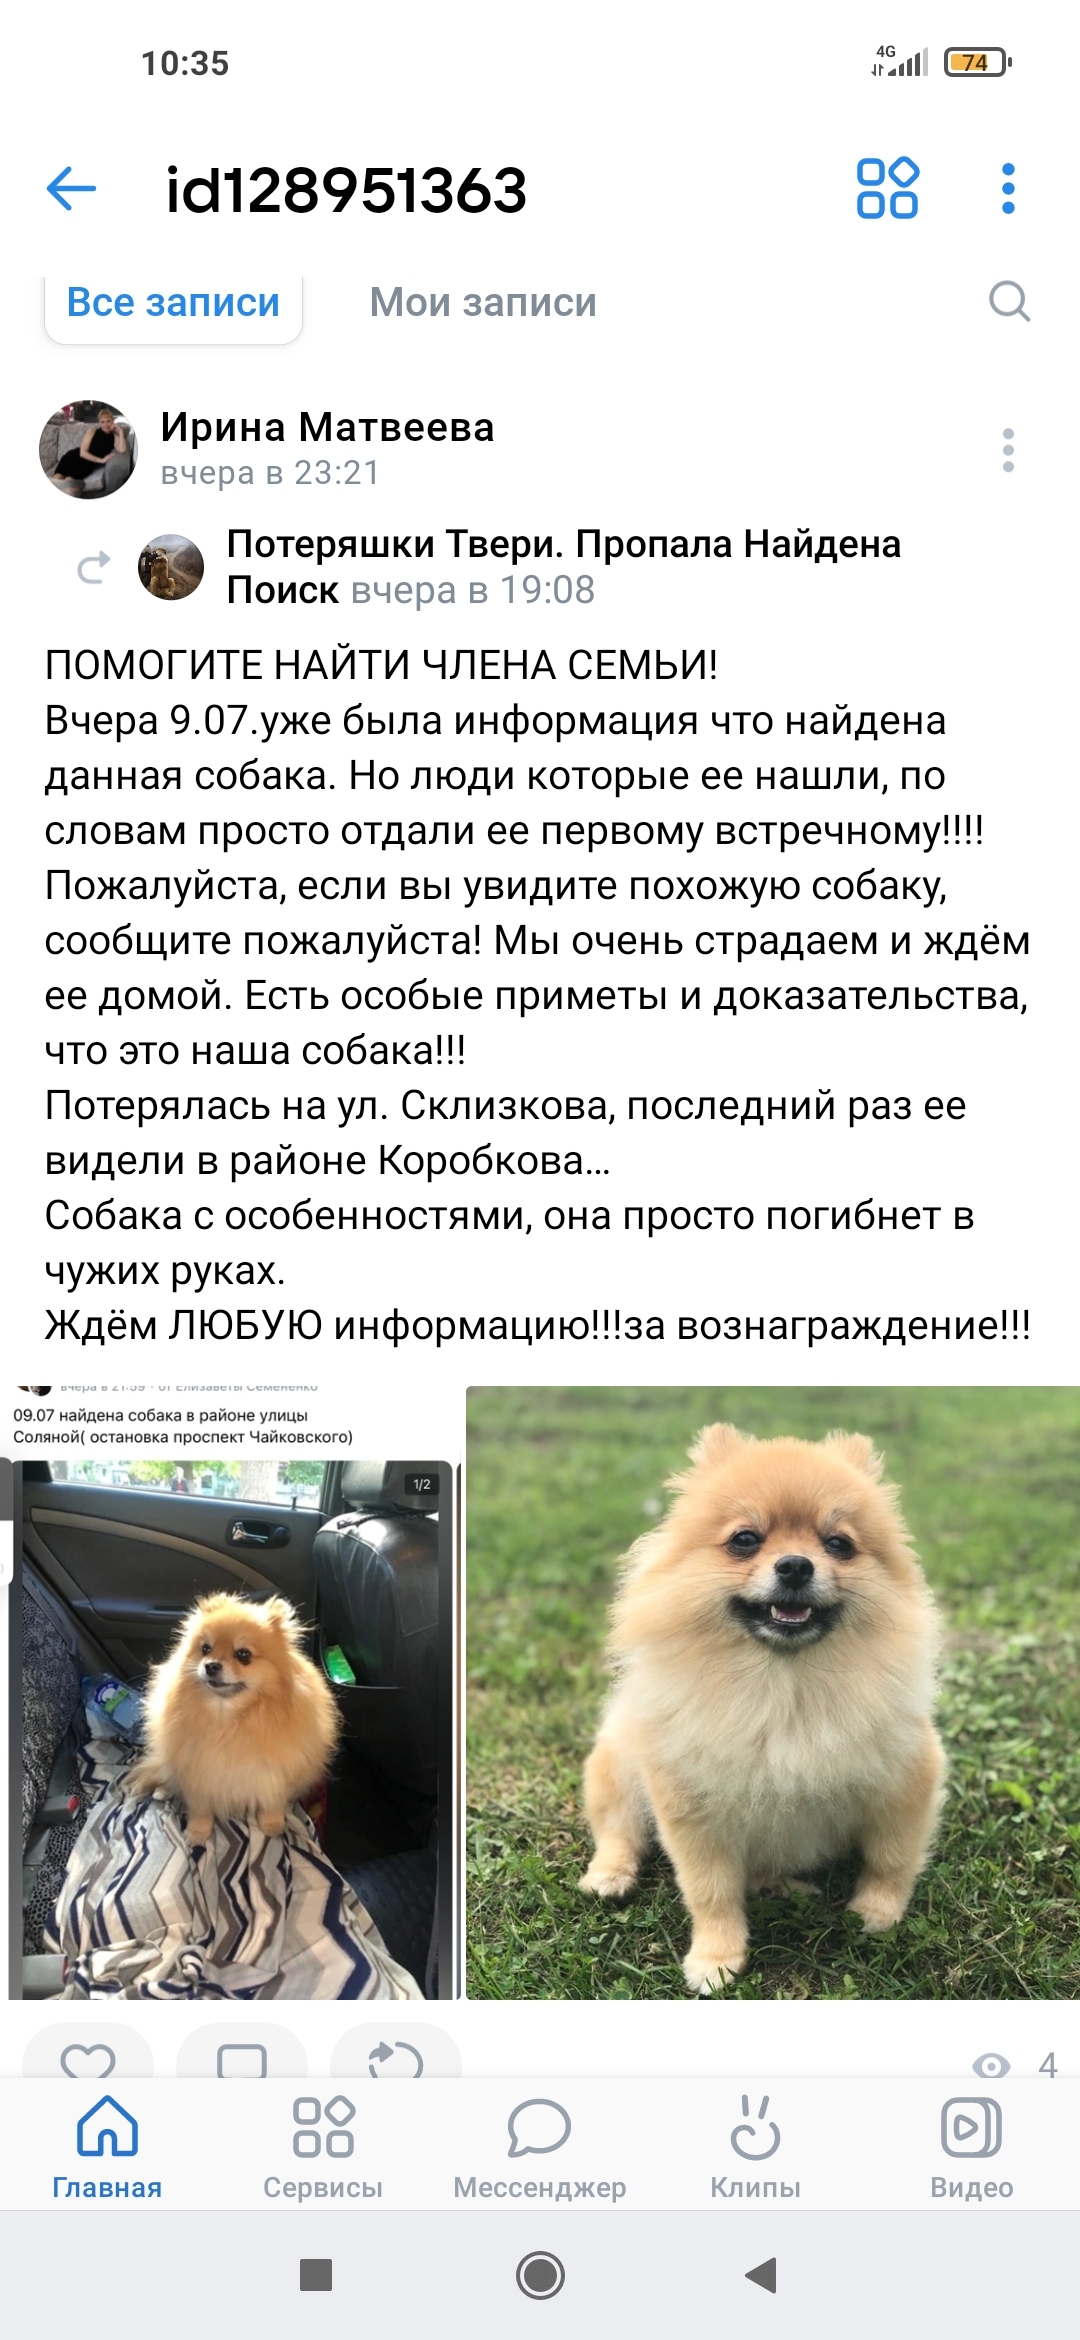 Пропала собака Померанский шпиц окрас Оранж, пр. Чайковского, 21, Тверь